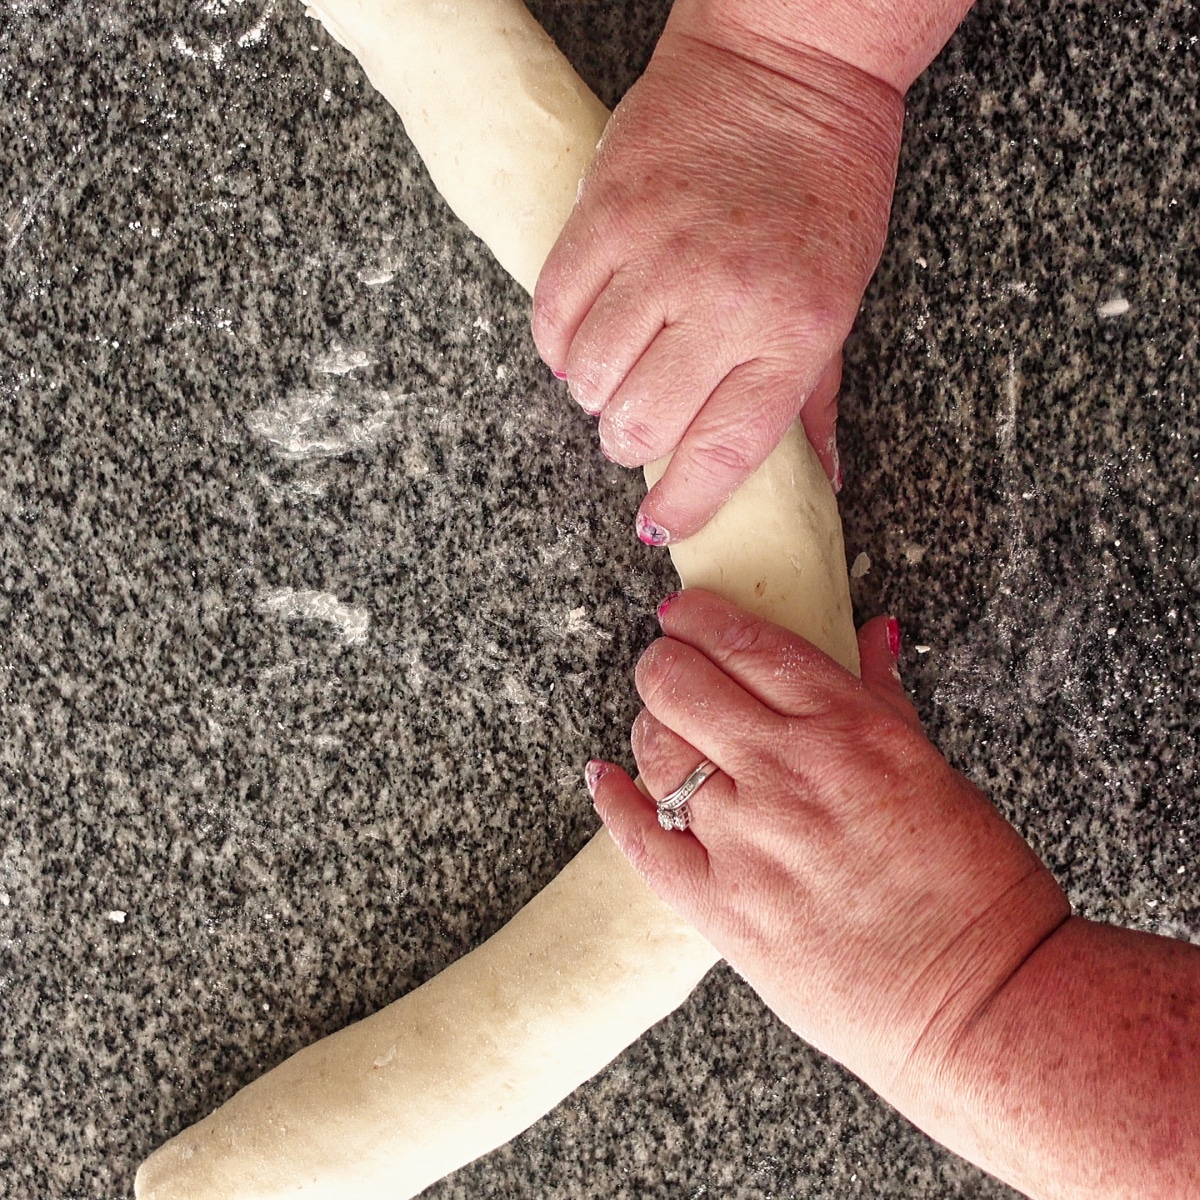 elongating the log of dough.